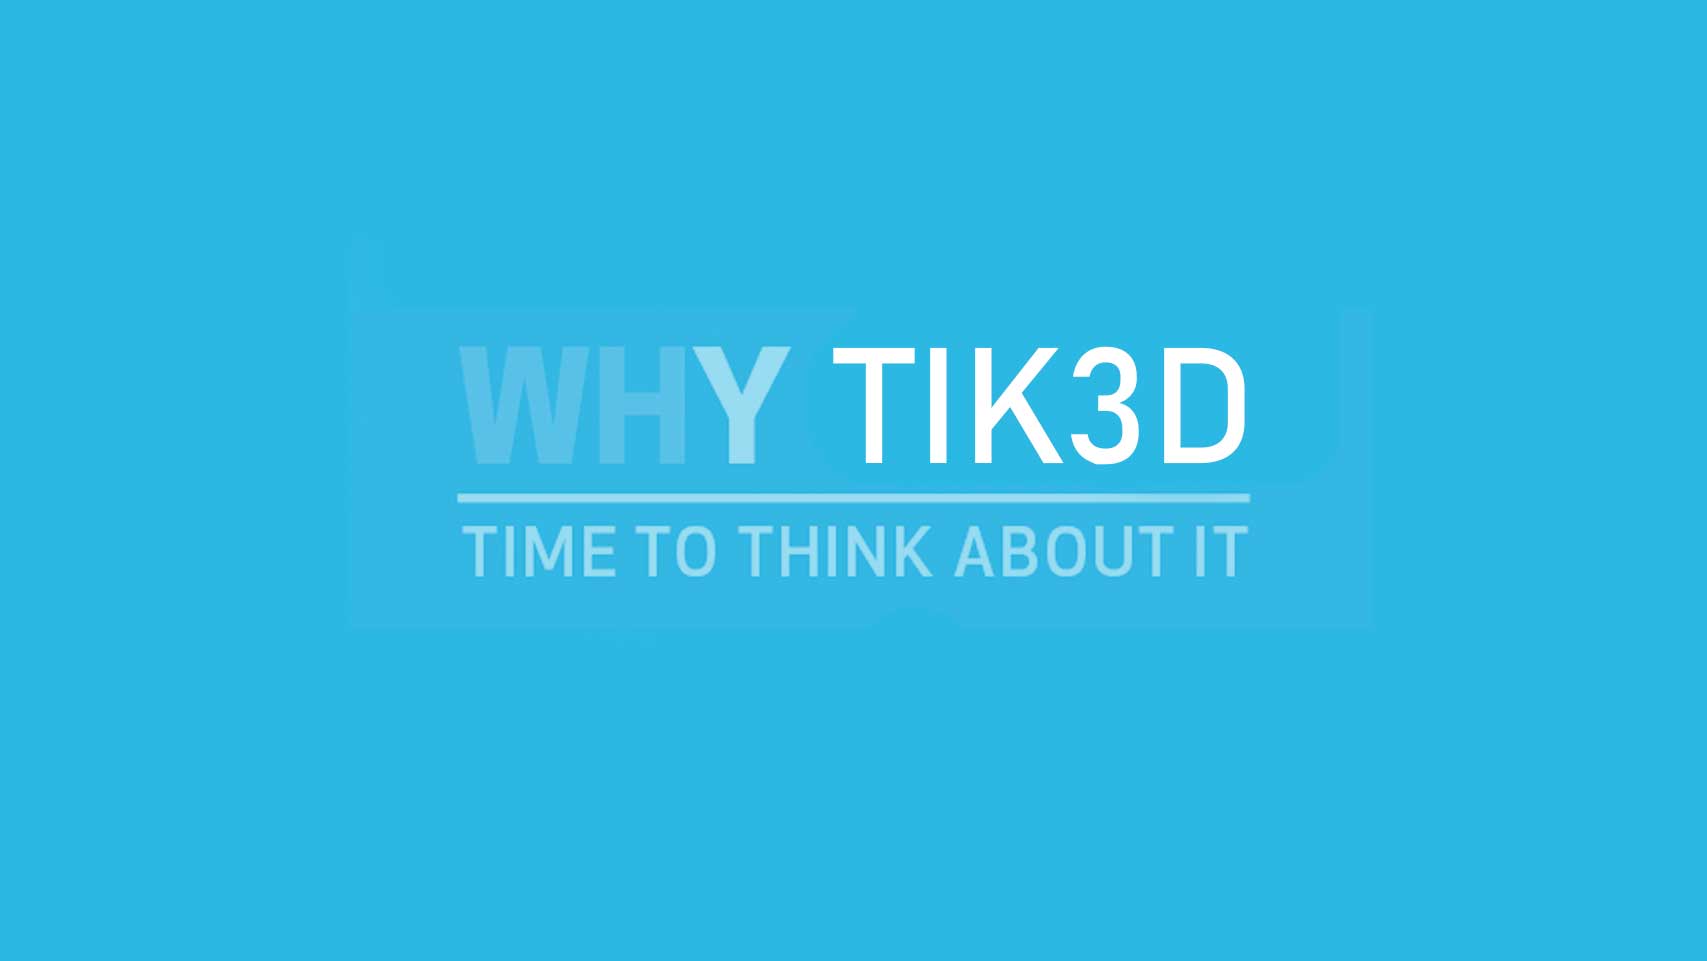 Why Tik3D